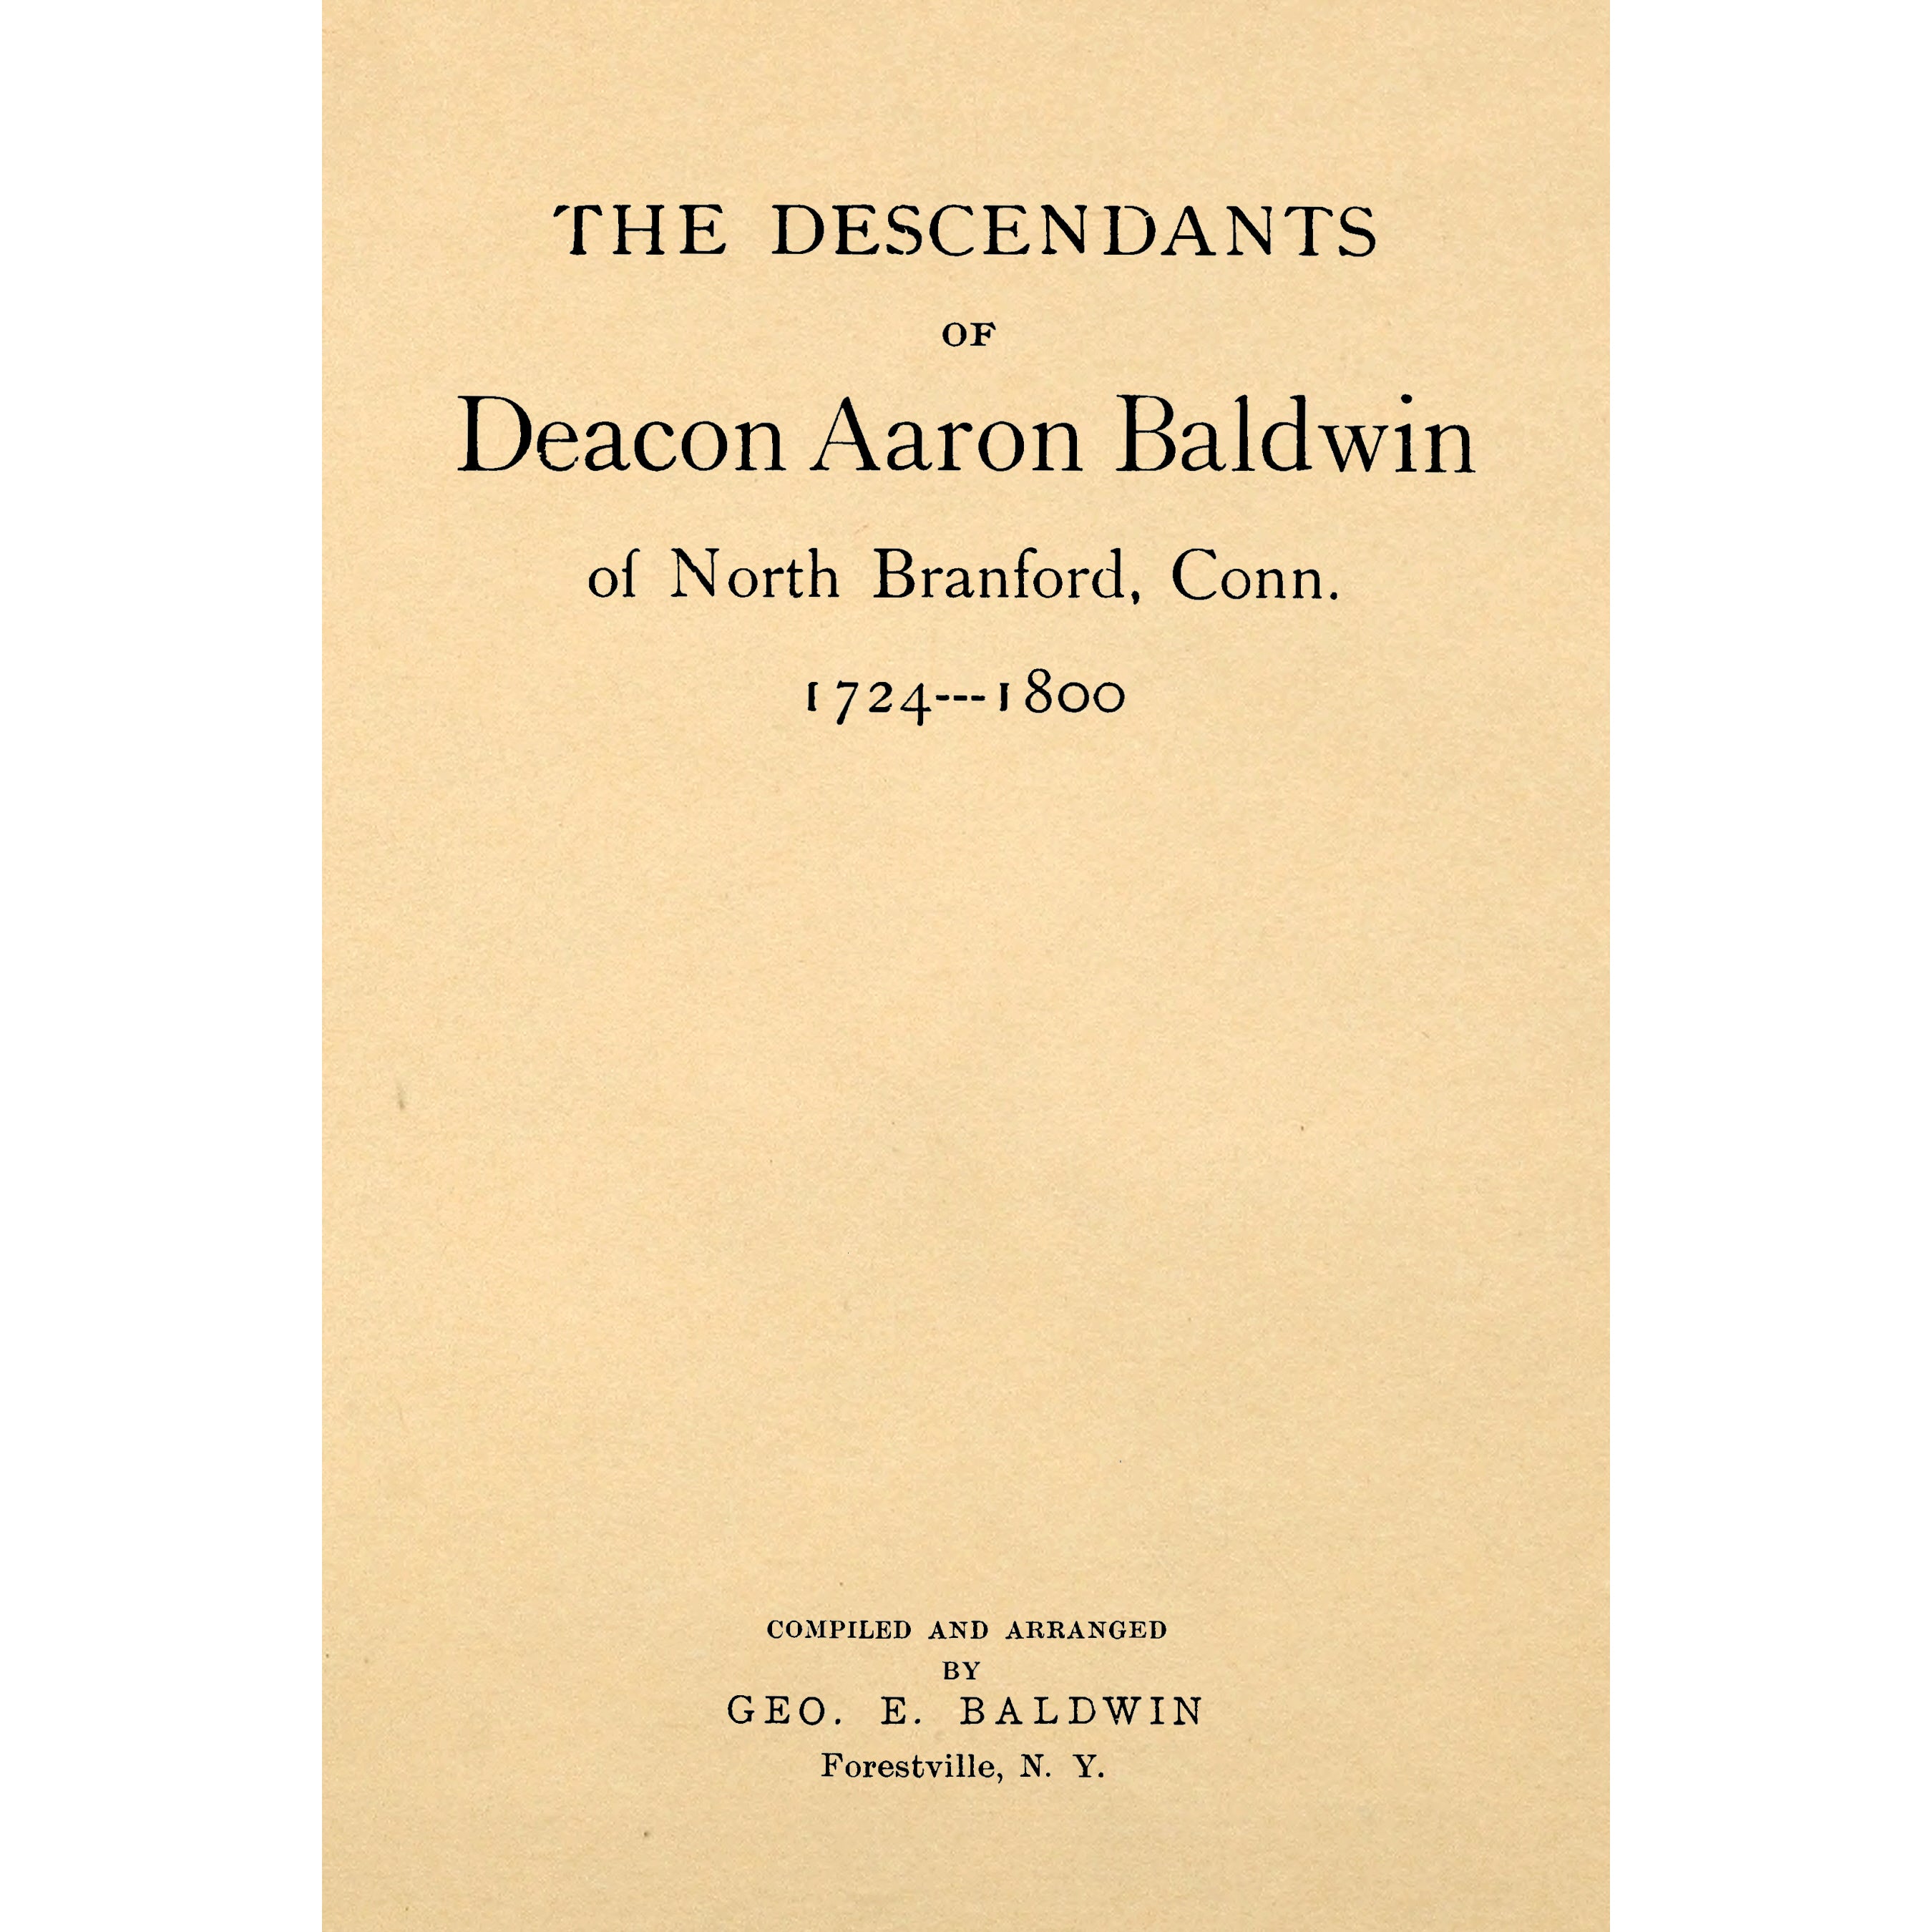 The descendants of Deacon Aaron Baldwin, of North Branford, Conn. 1724-1800